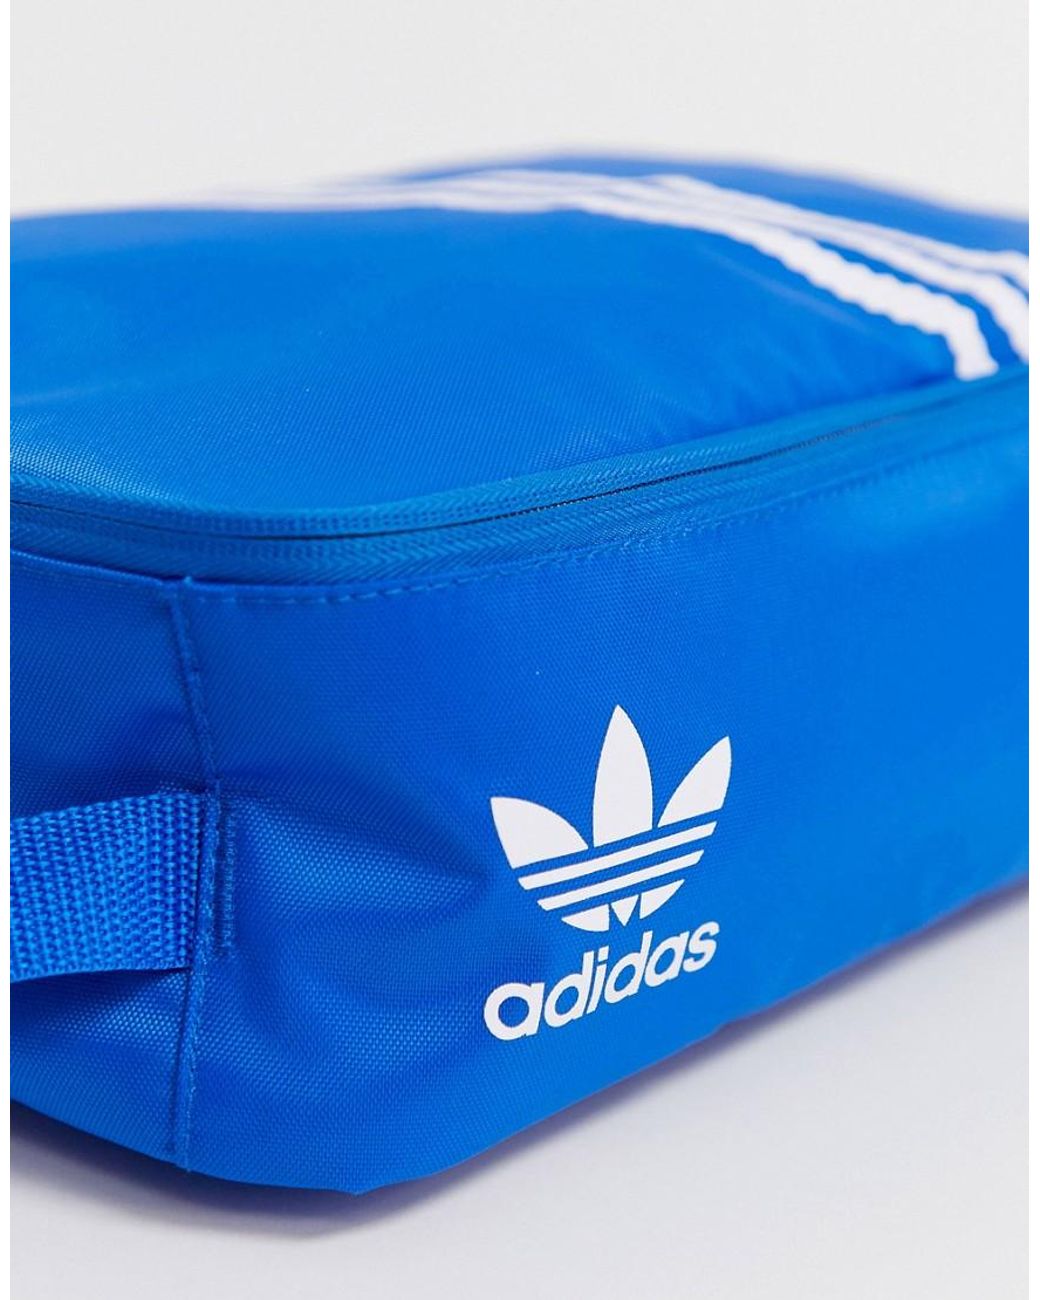 adidas Originals Synthetic Shoe Box Bag in Blue | Lyst Australia